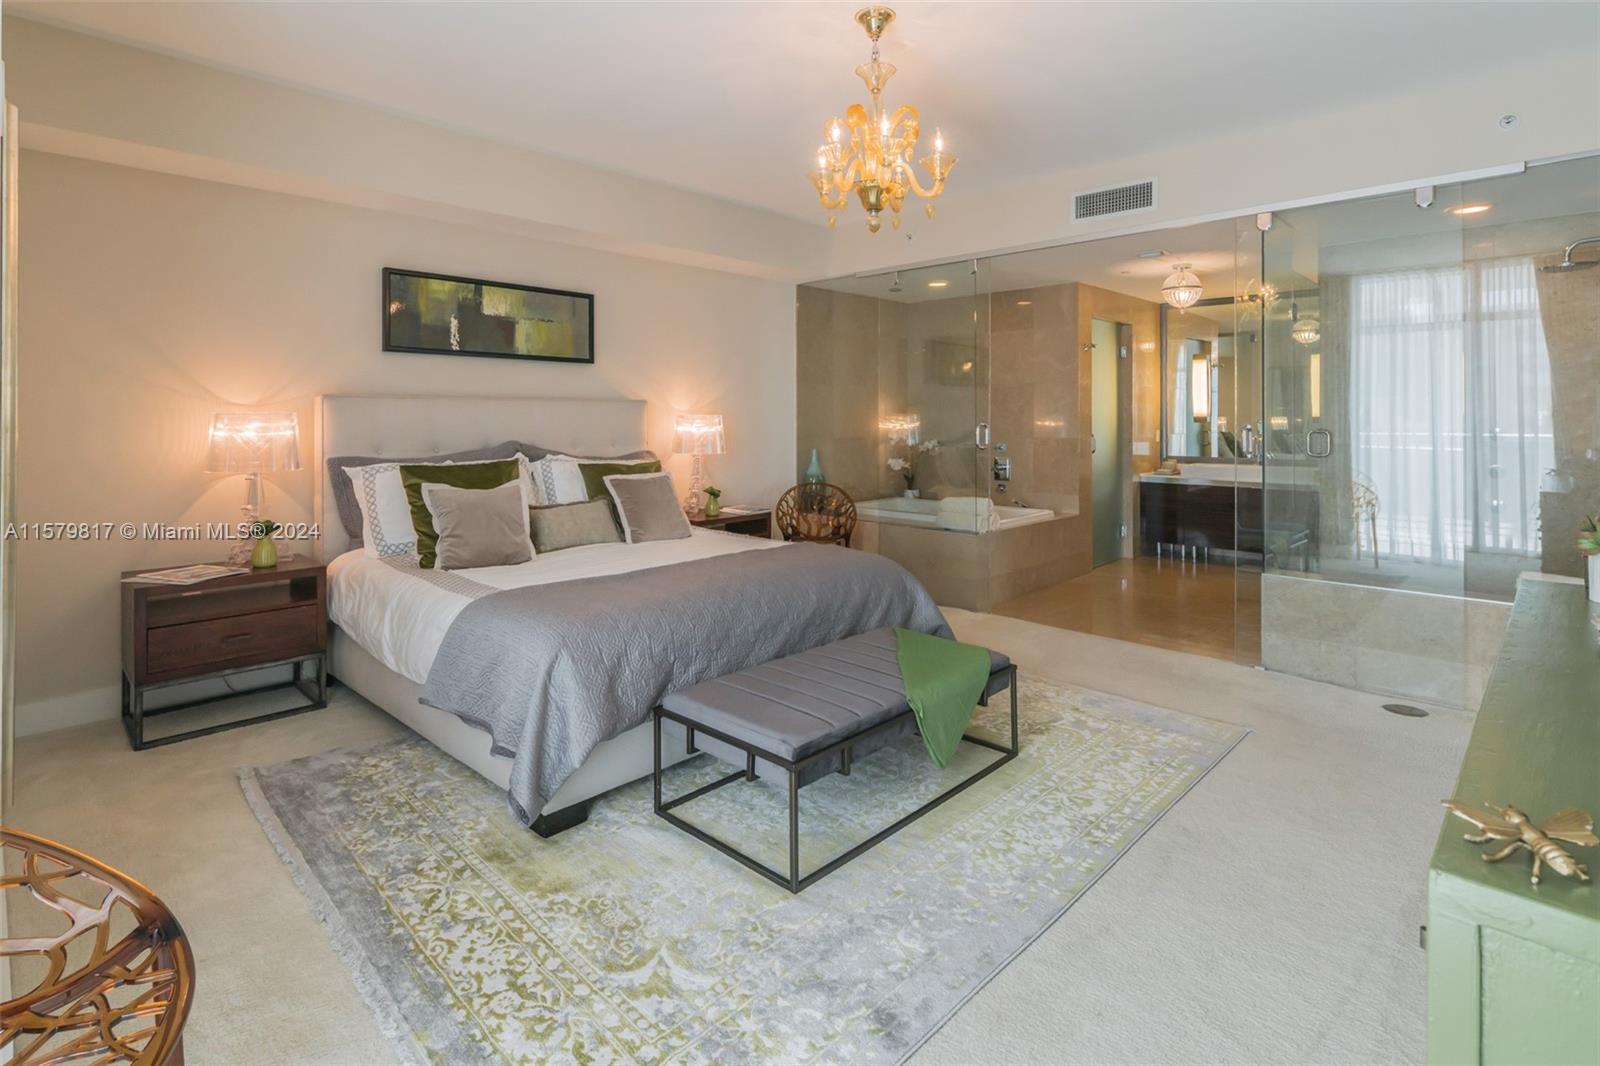 Rental Property at 3737 Collins Ave S-403, Miami Beach, Miami-Dade County, Florida - Bedrooms: 2 
Bathrooms: 3  - $7,650 MO.